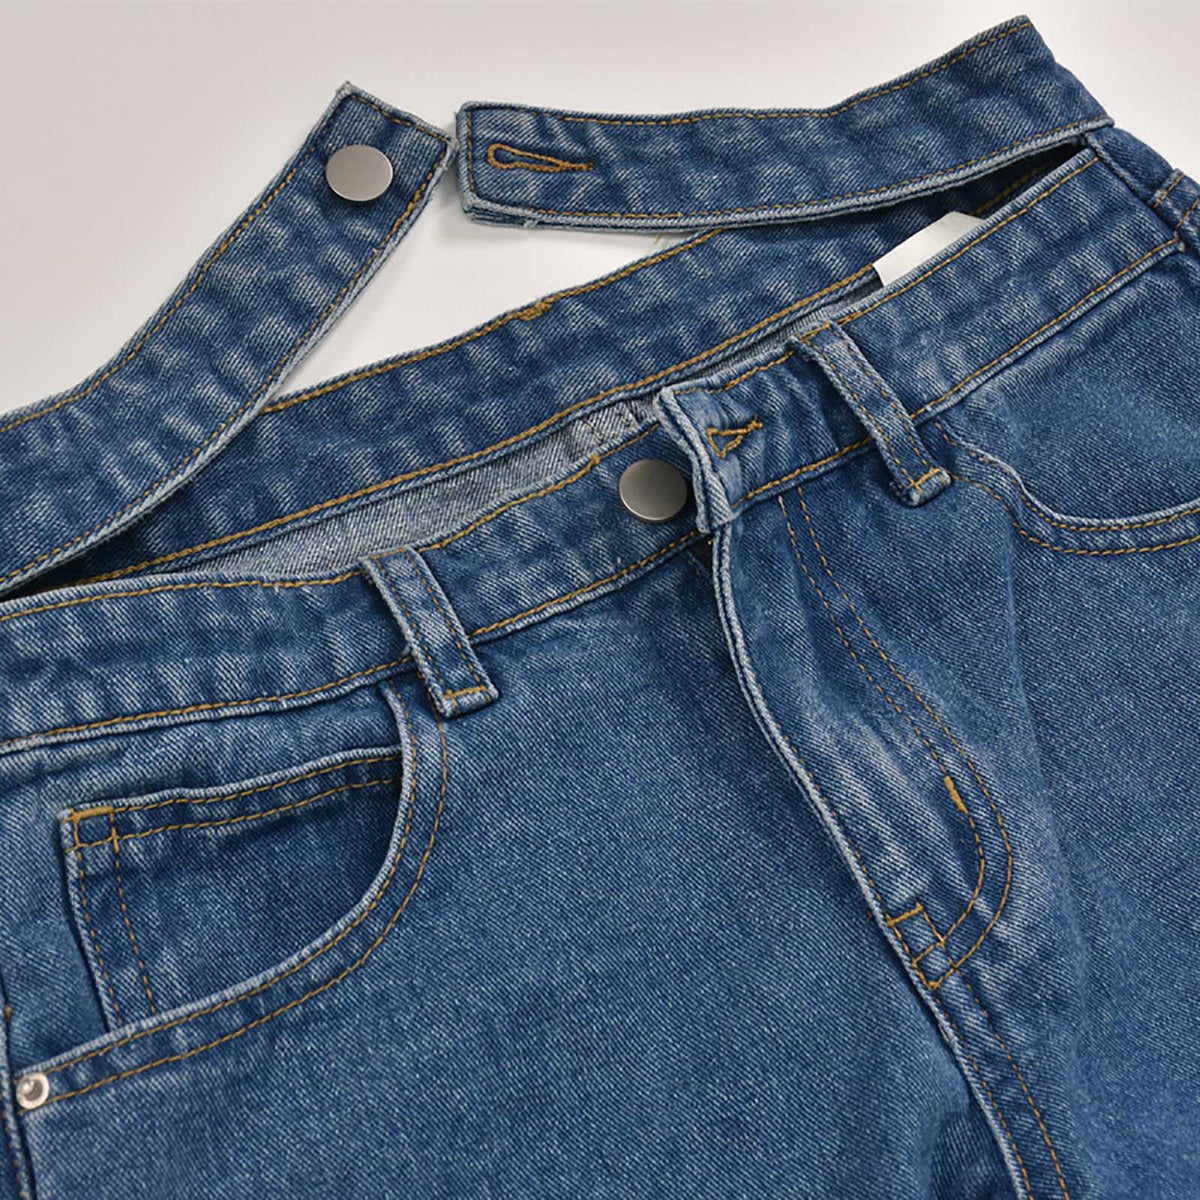 Jeans Women's New High-waist Washed Blue Long Jeans Angelwarriorfitness.com